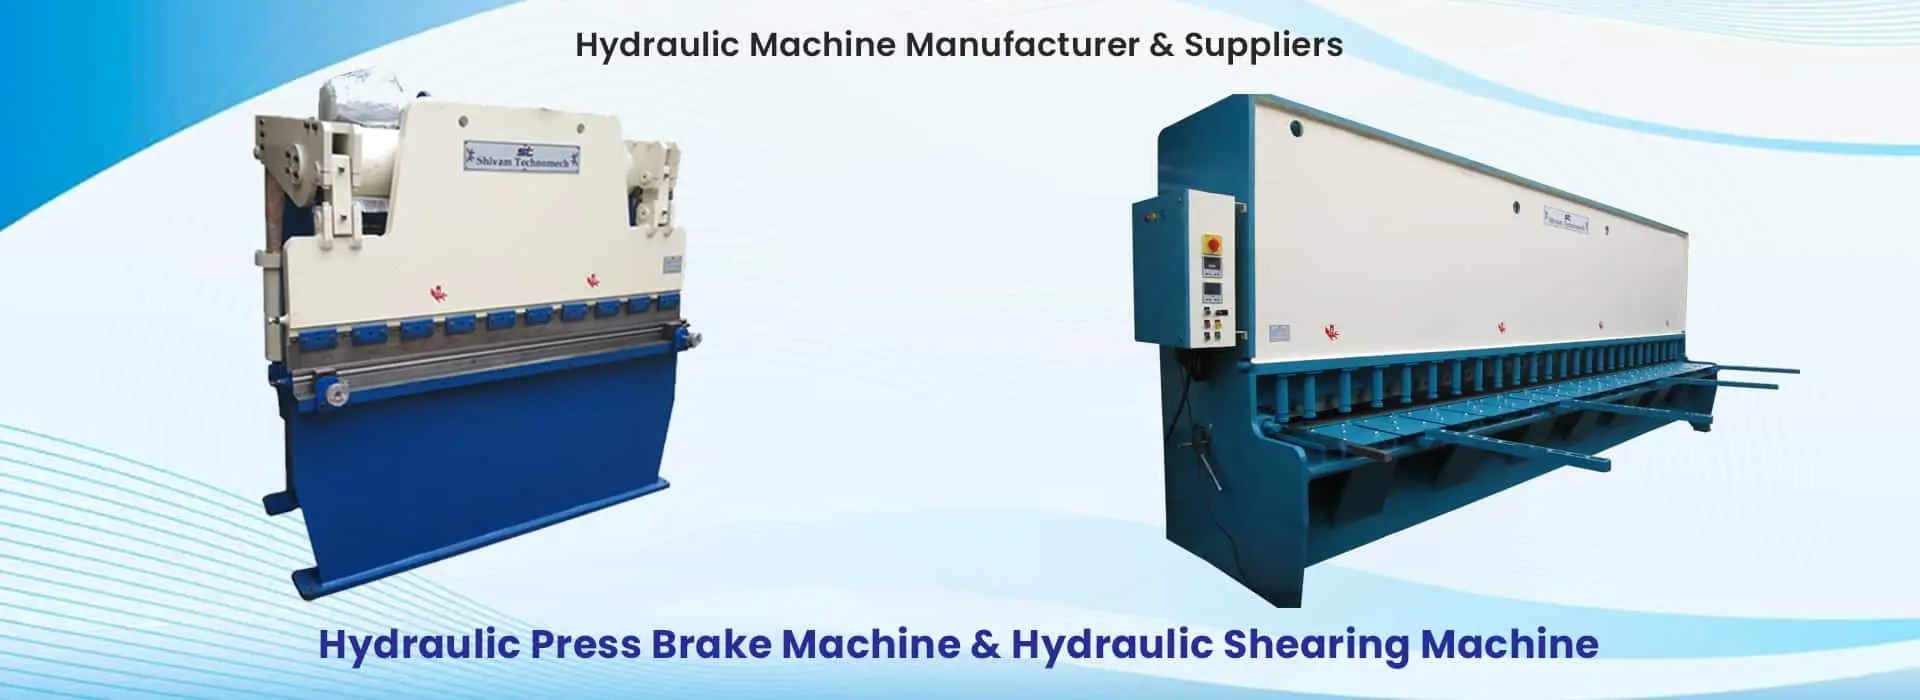 home-banner - Hydraulic Press Brake Machine & Hydrulic Shearing Machine